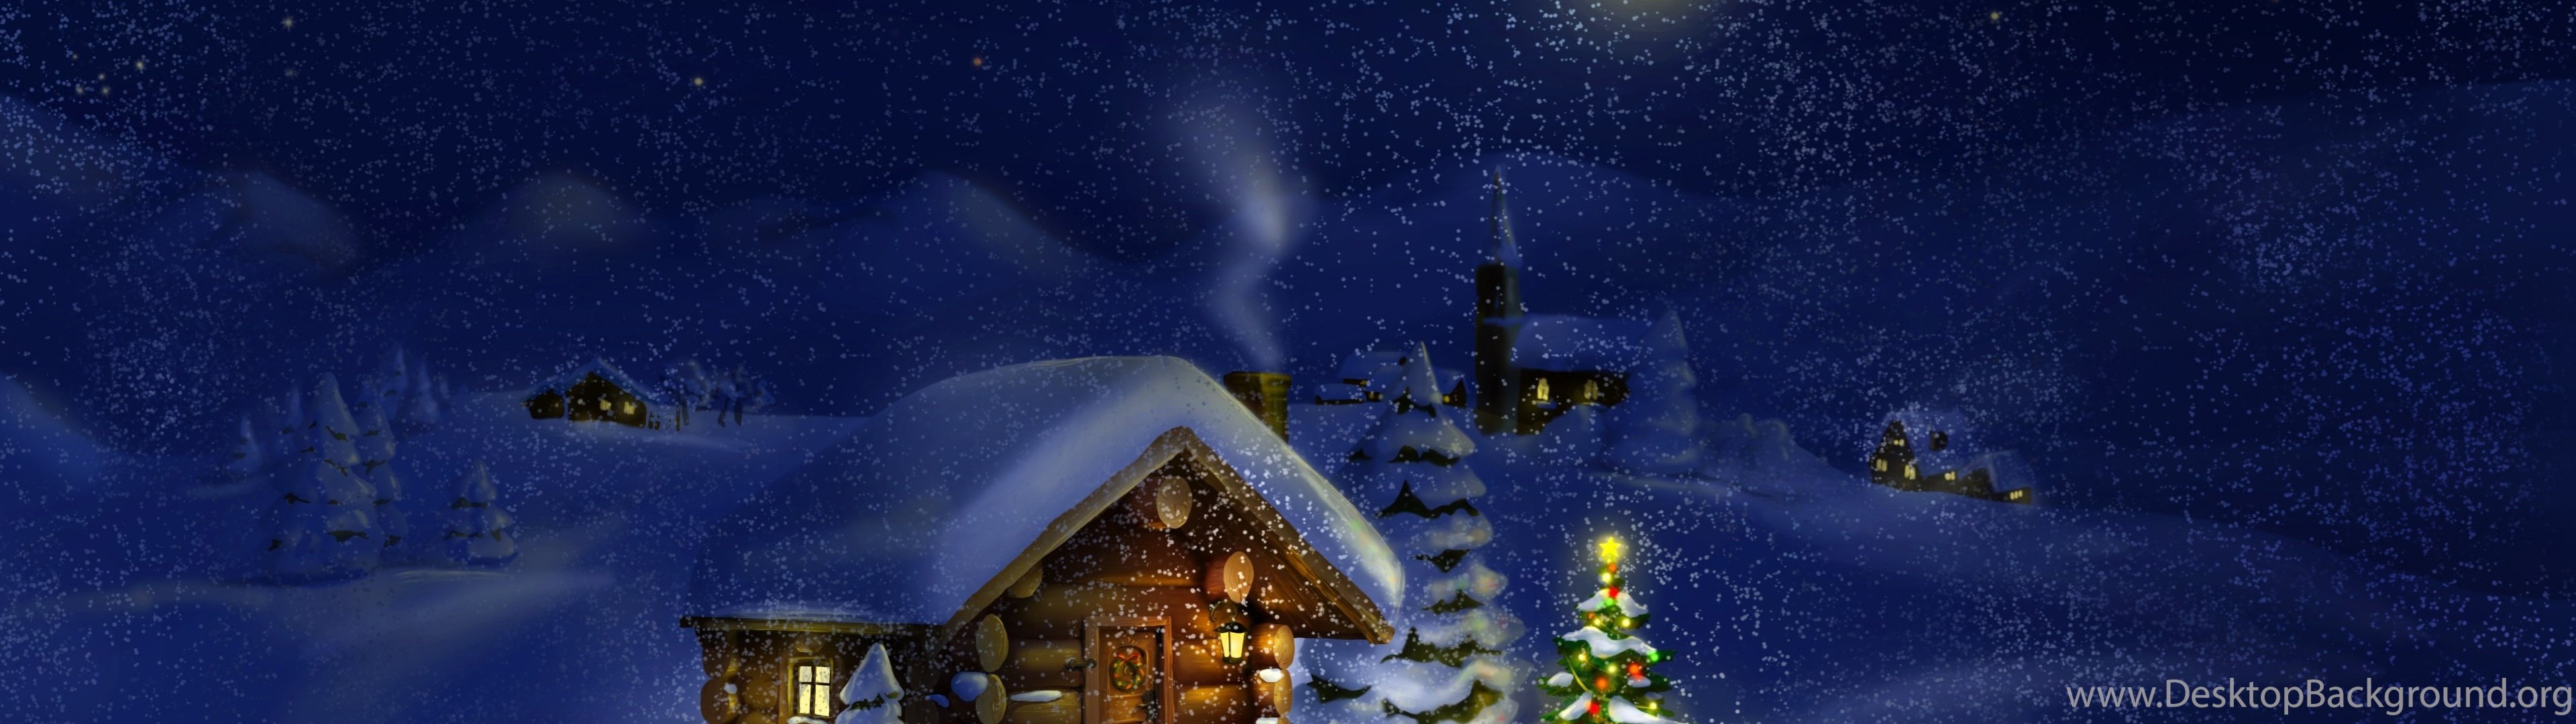 dual monitor christmas wallpaper,winter,sky,night,atmosphere,snow